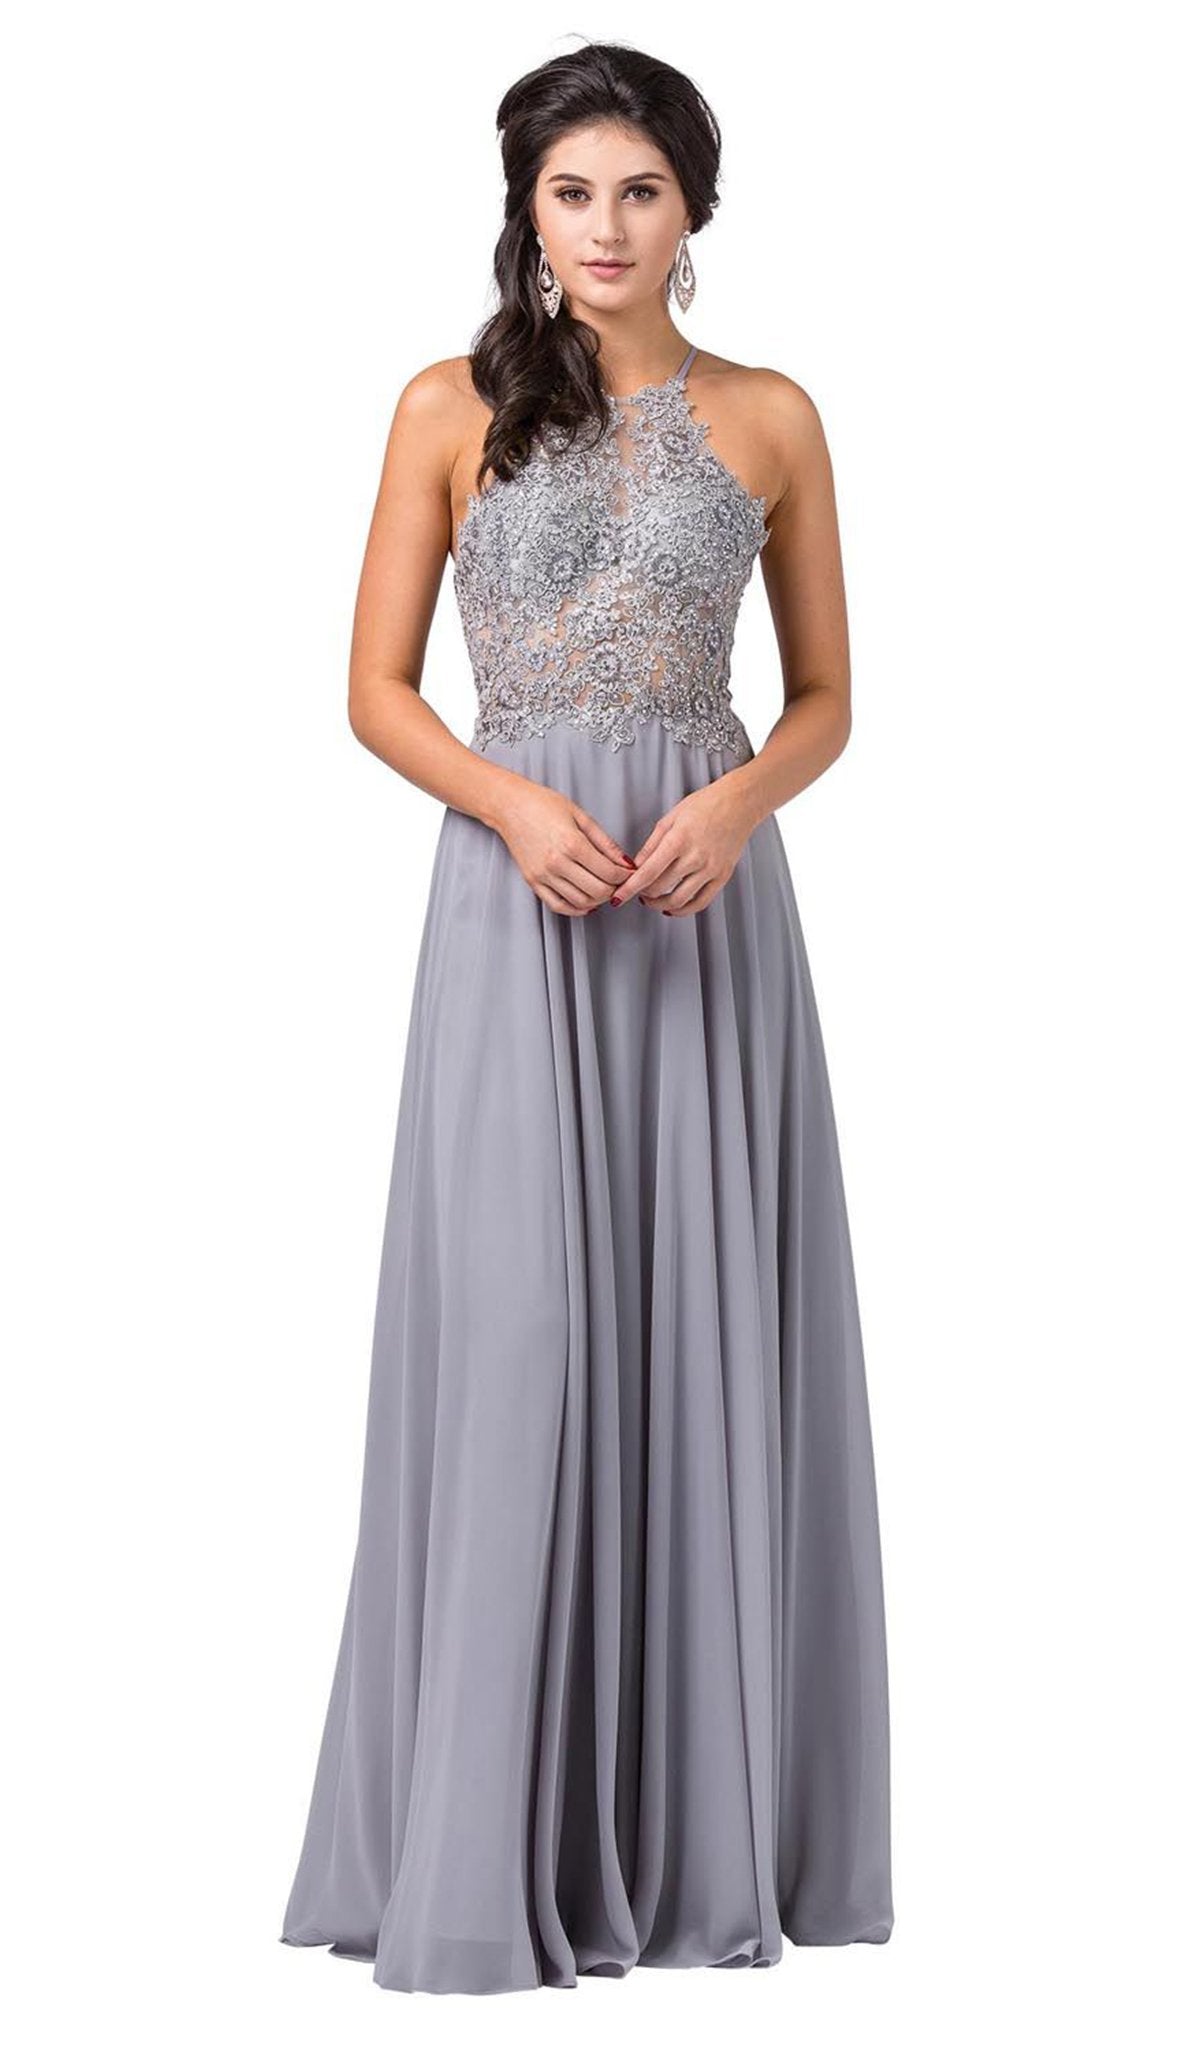 Dancing Queen - 2716 Lace Applique Halter A-line Dress In Silver